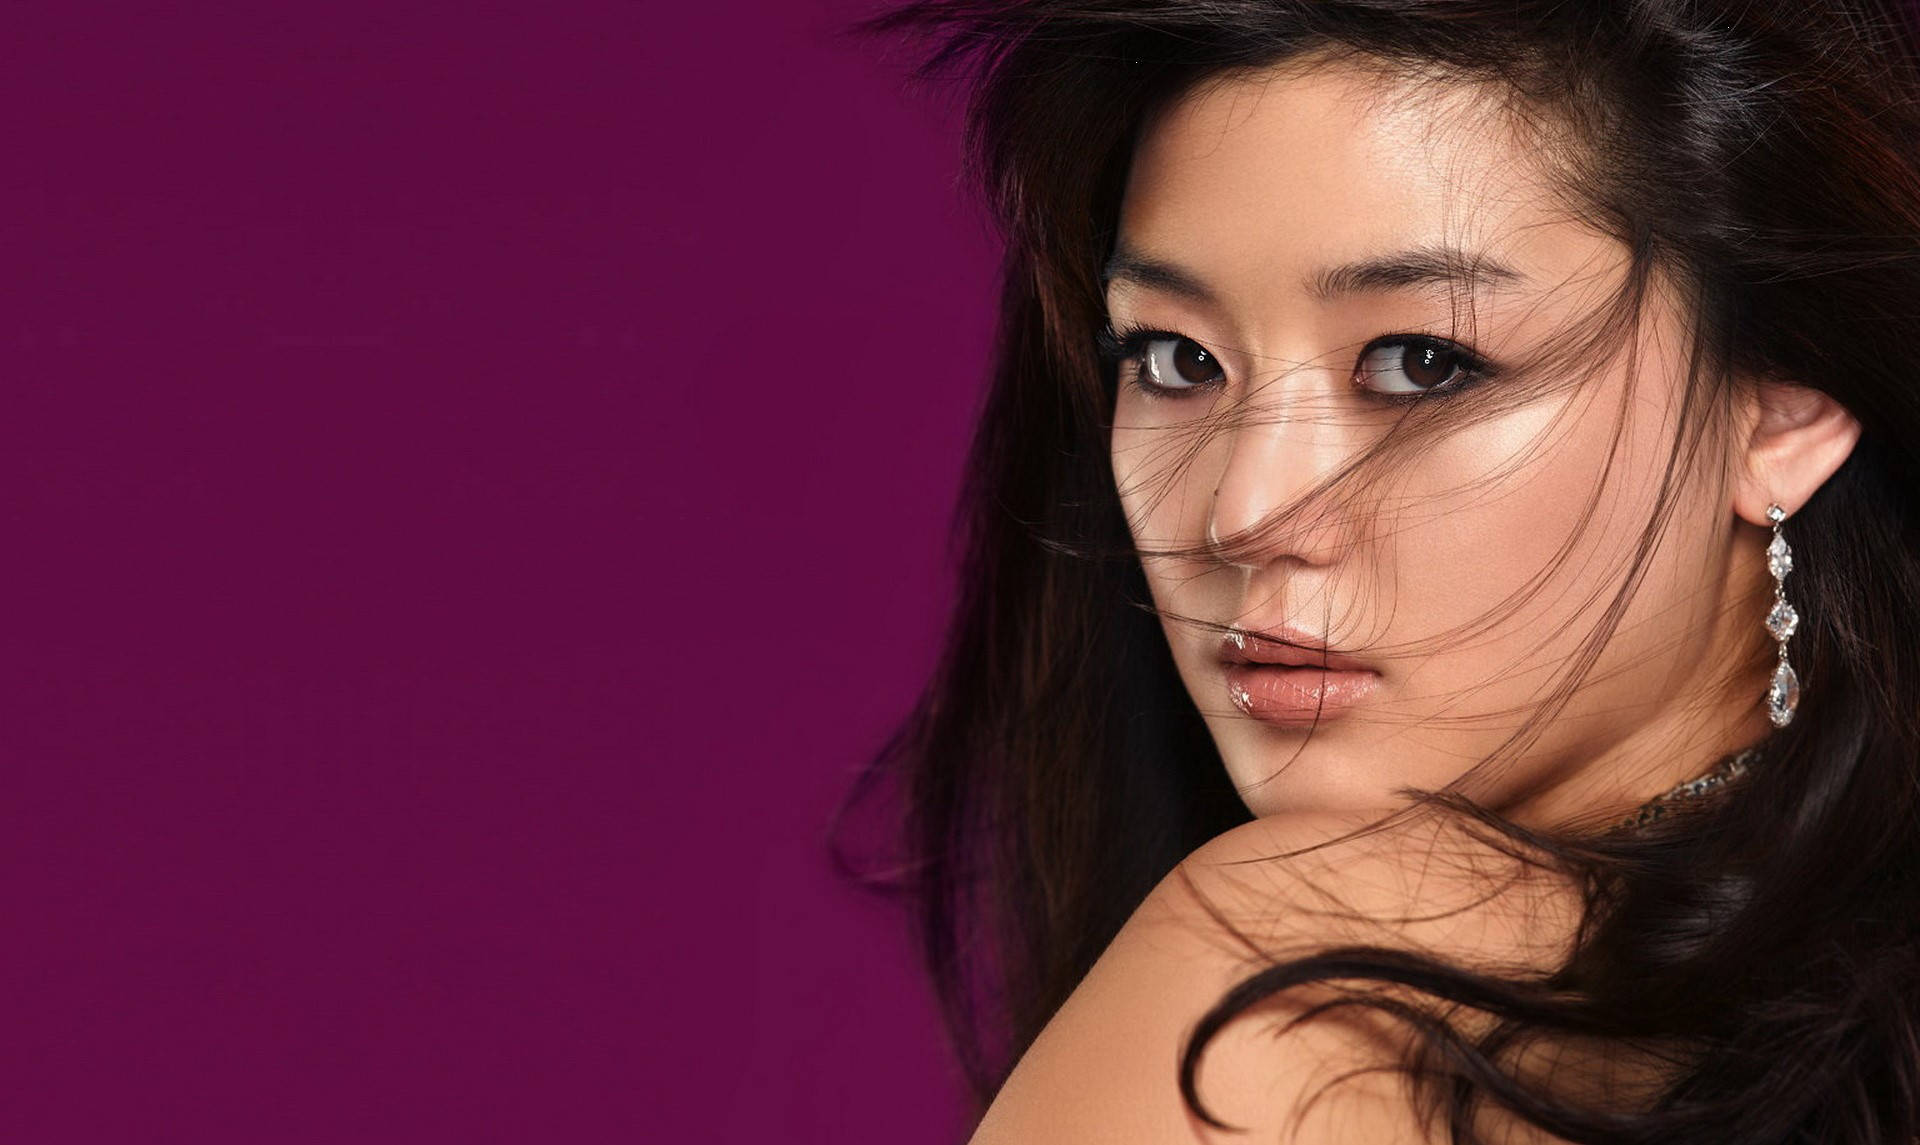 South Korean Actress Jun Ji Hyun In A Stylized Photoshoot Background